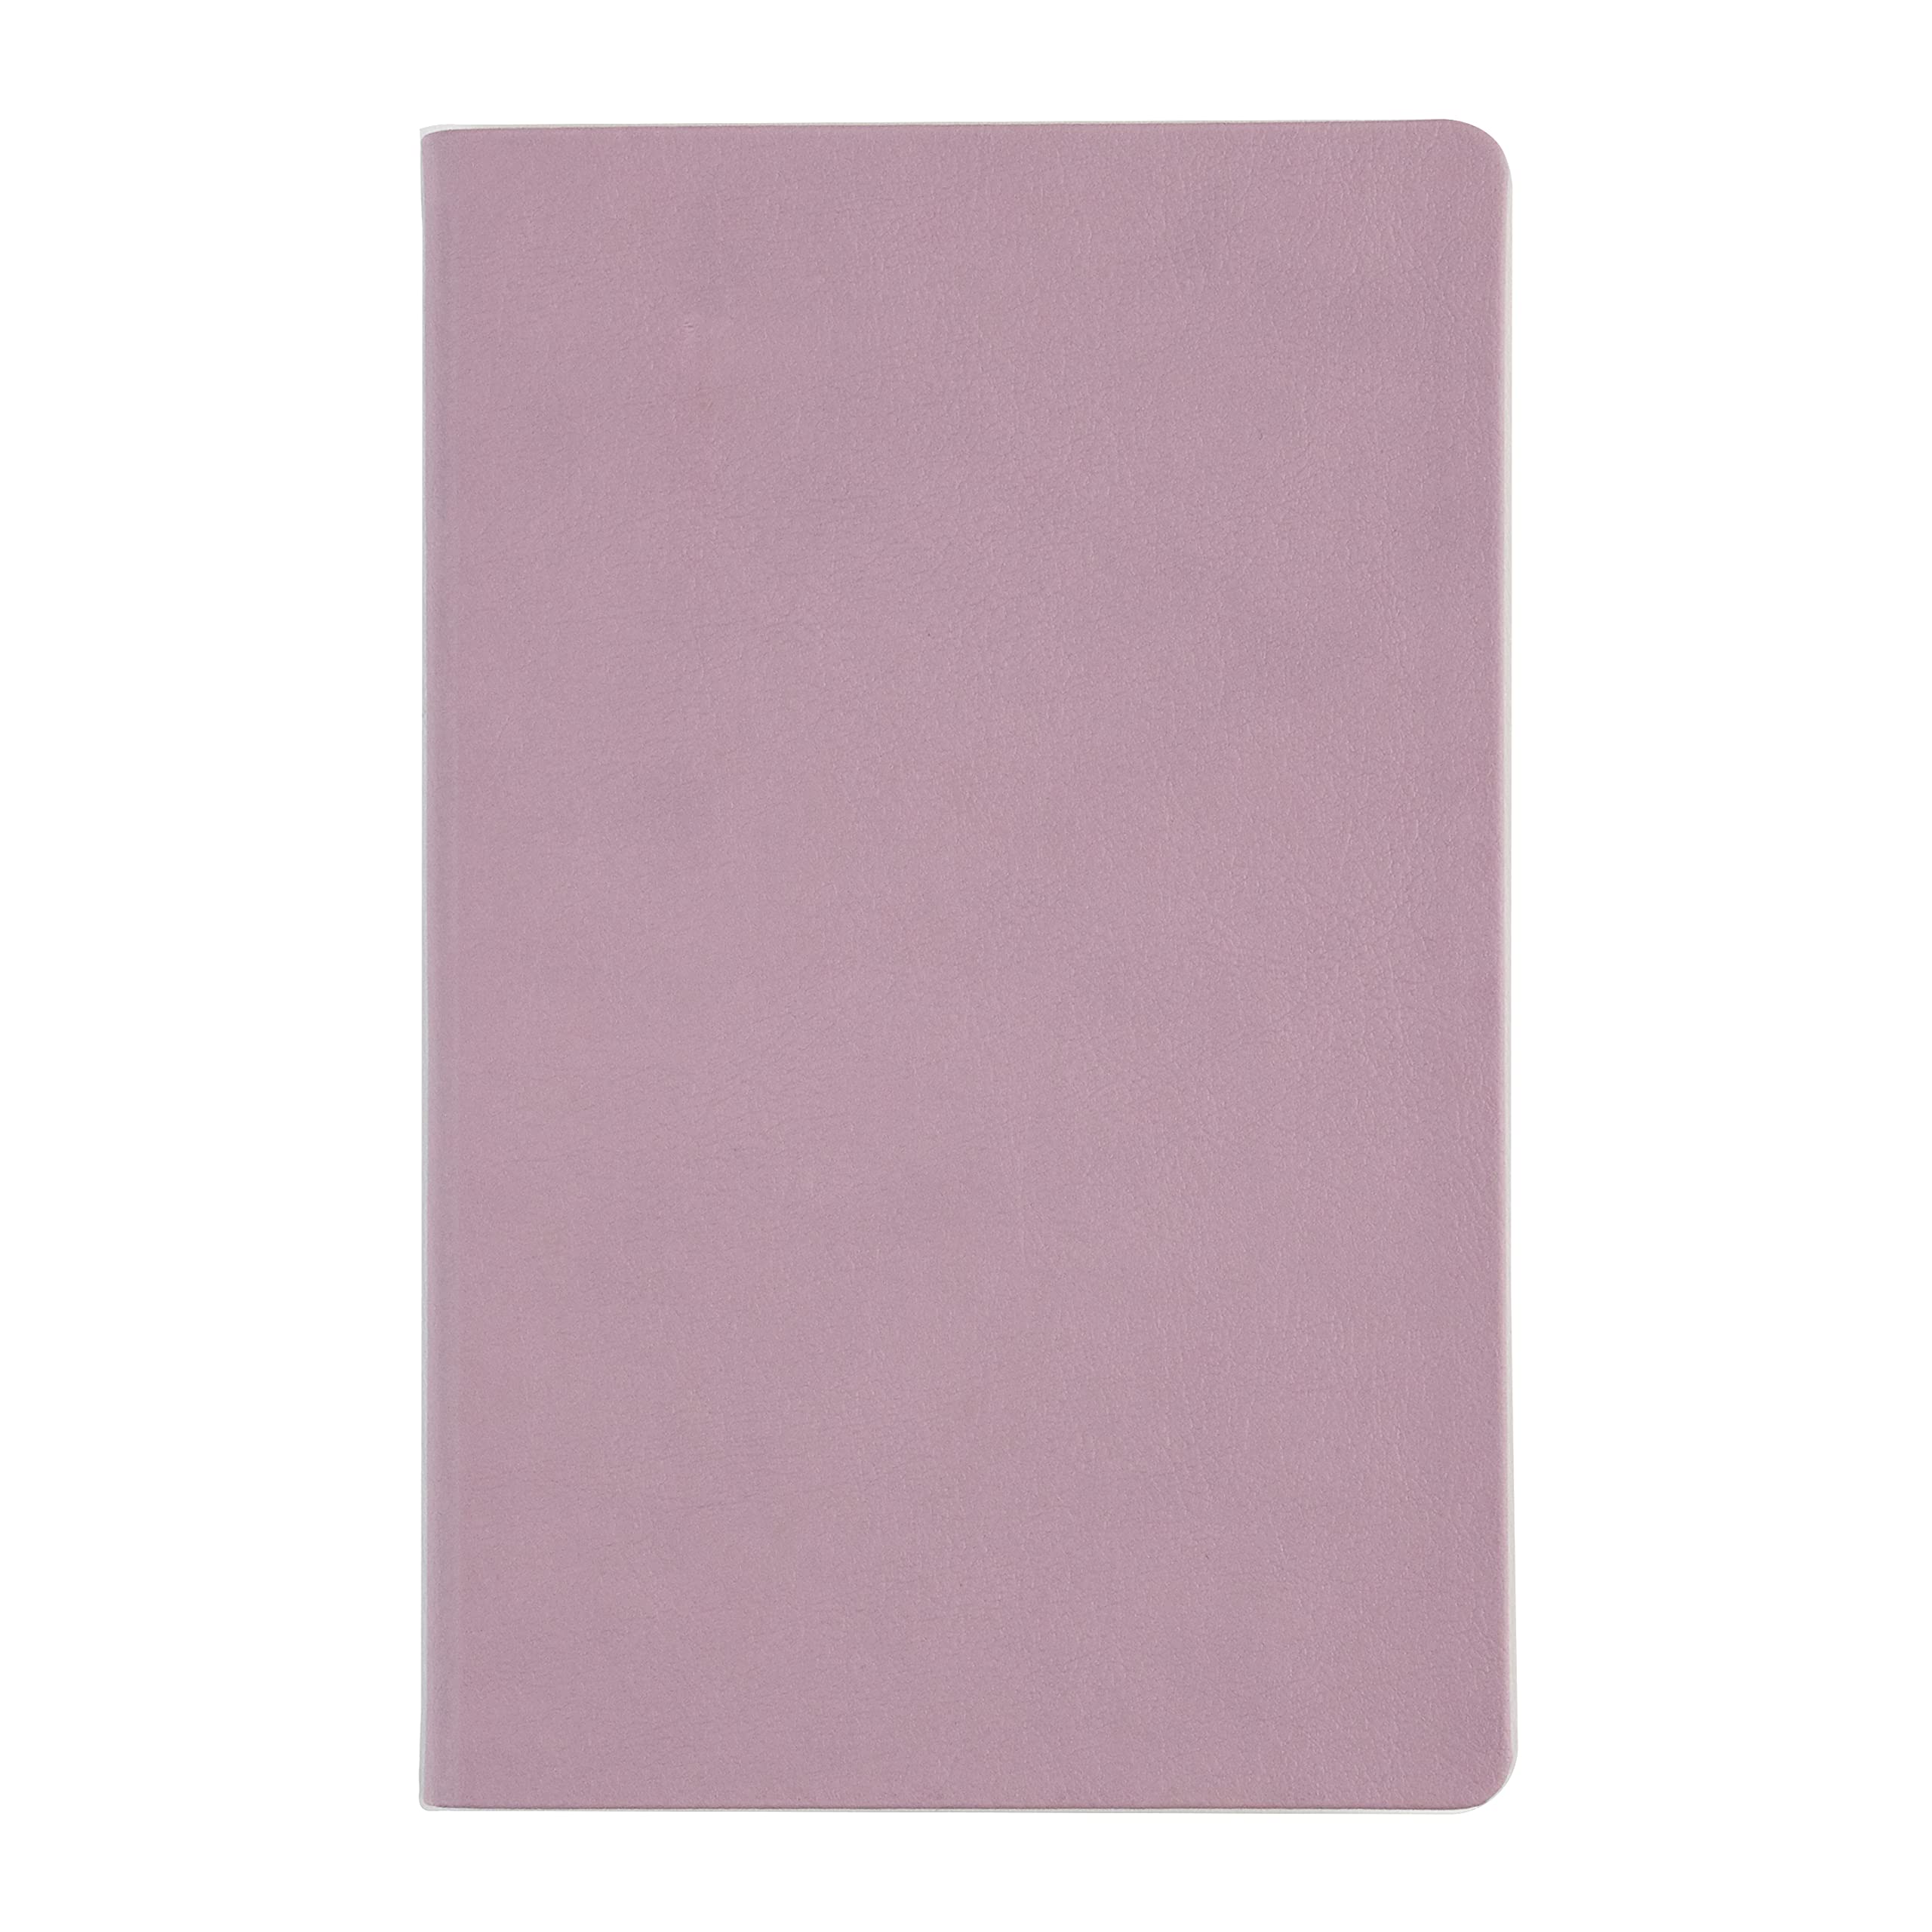 Erin Condren 5x8 Softbound Notebook - Wisteria, Lined